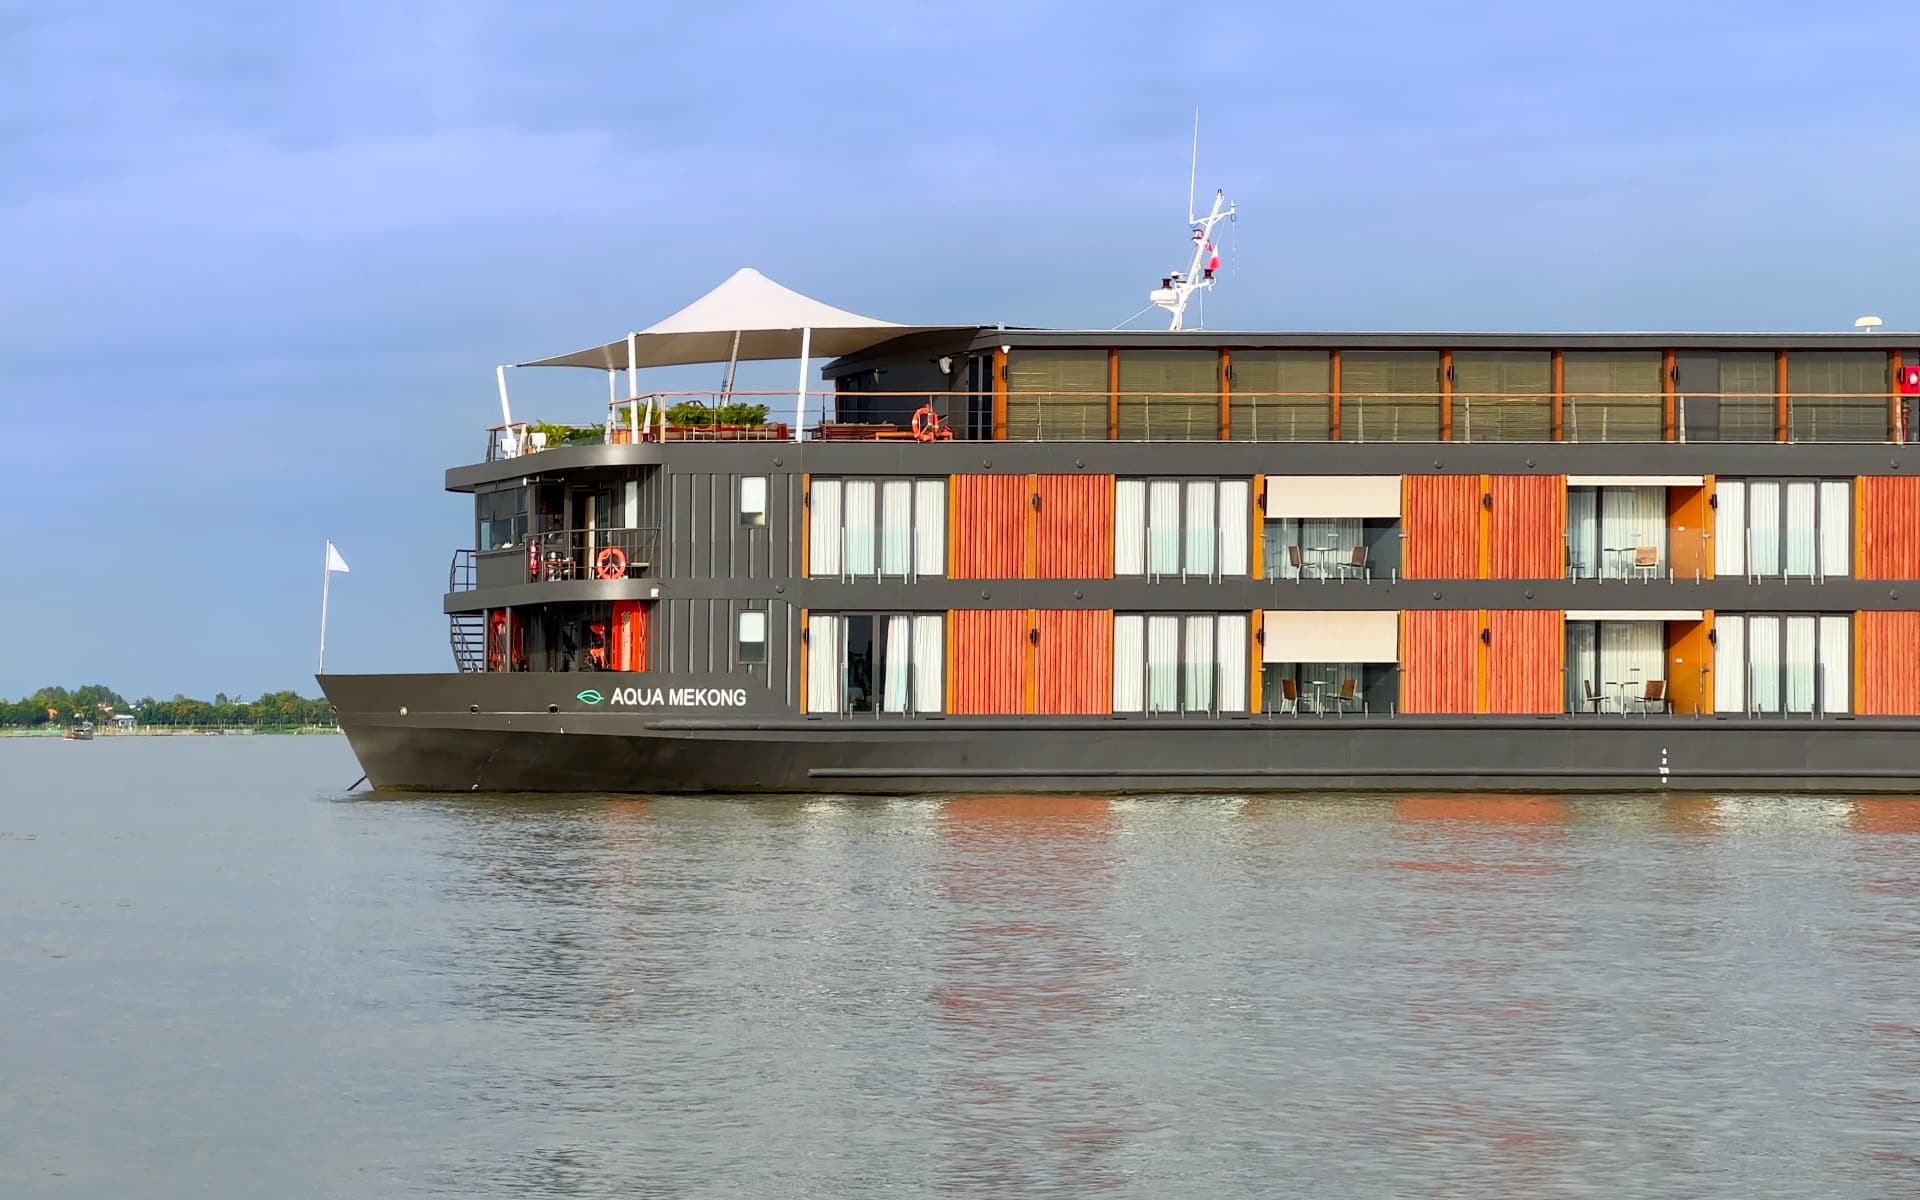 Aqua Mekong - river cruise ship.